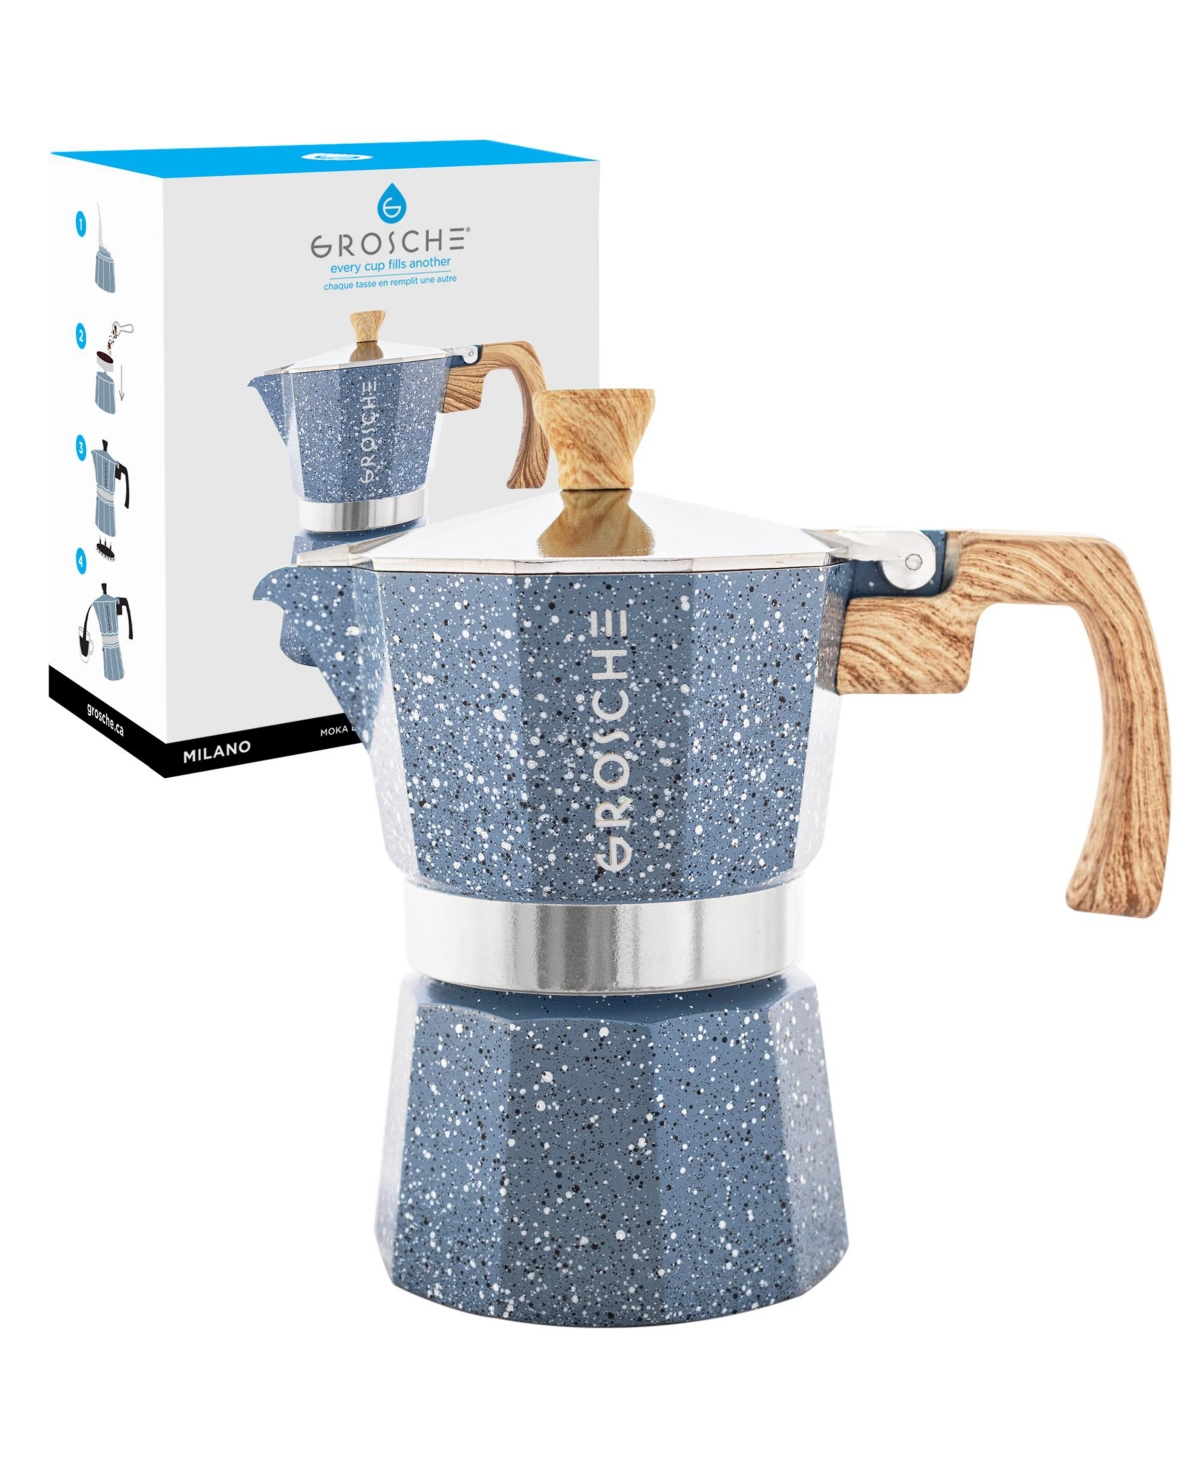 Grosche Milano Stone Stovetop Espresso Maker Moka Pot 3 Cup, 5 oz In Indigo Blue